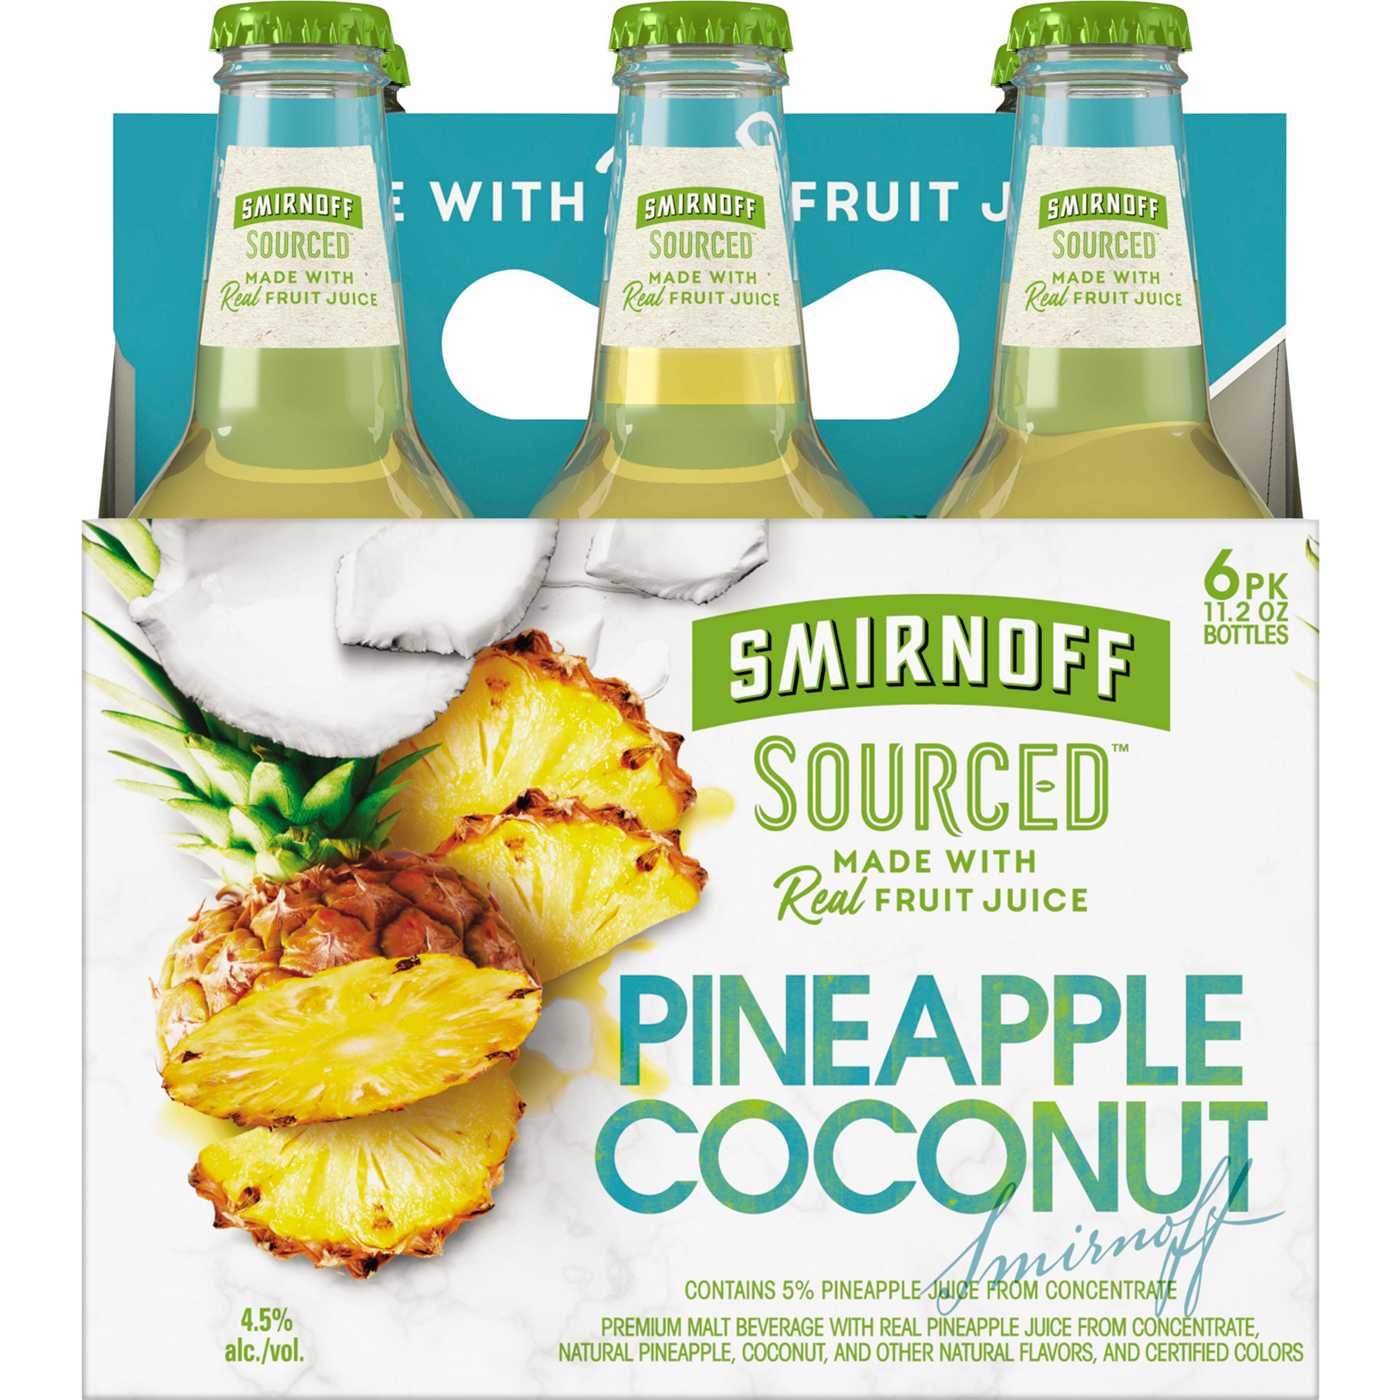 Smirnoff Sourced Pineapple Coconut; image 1 of 3